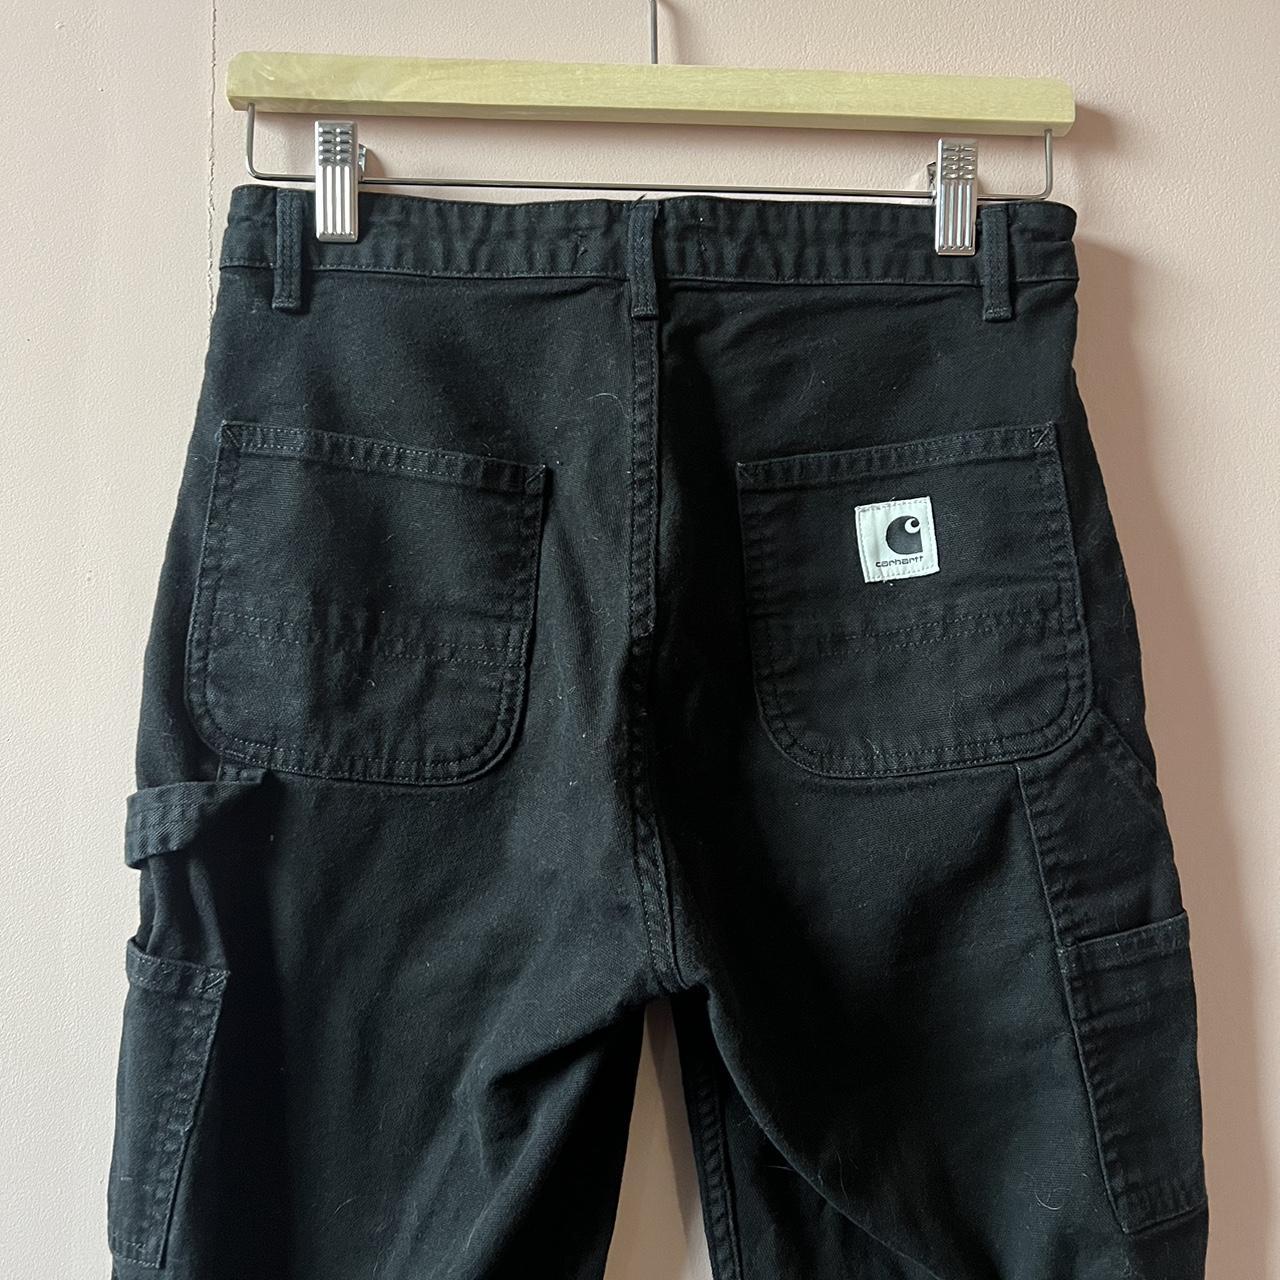 Carhartt WIP Pierce Pant Black Canvas Jeans, fits a... - Depop